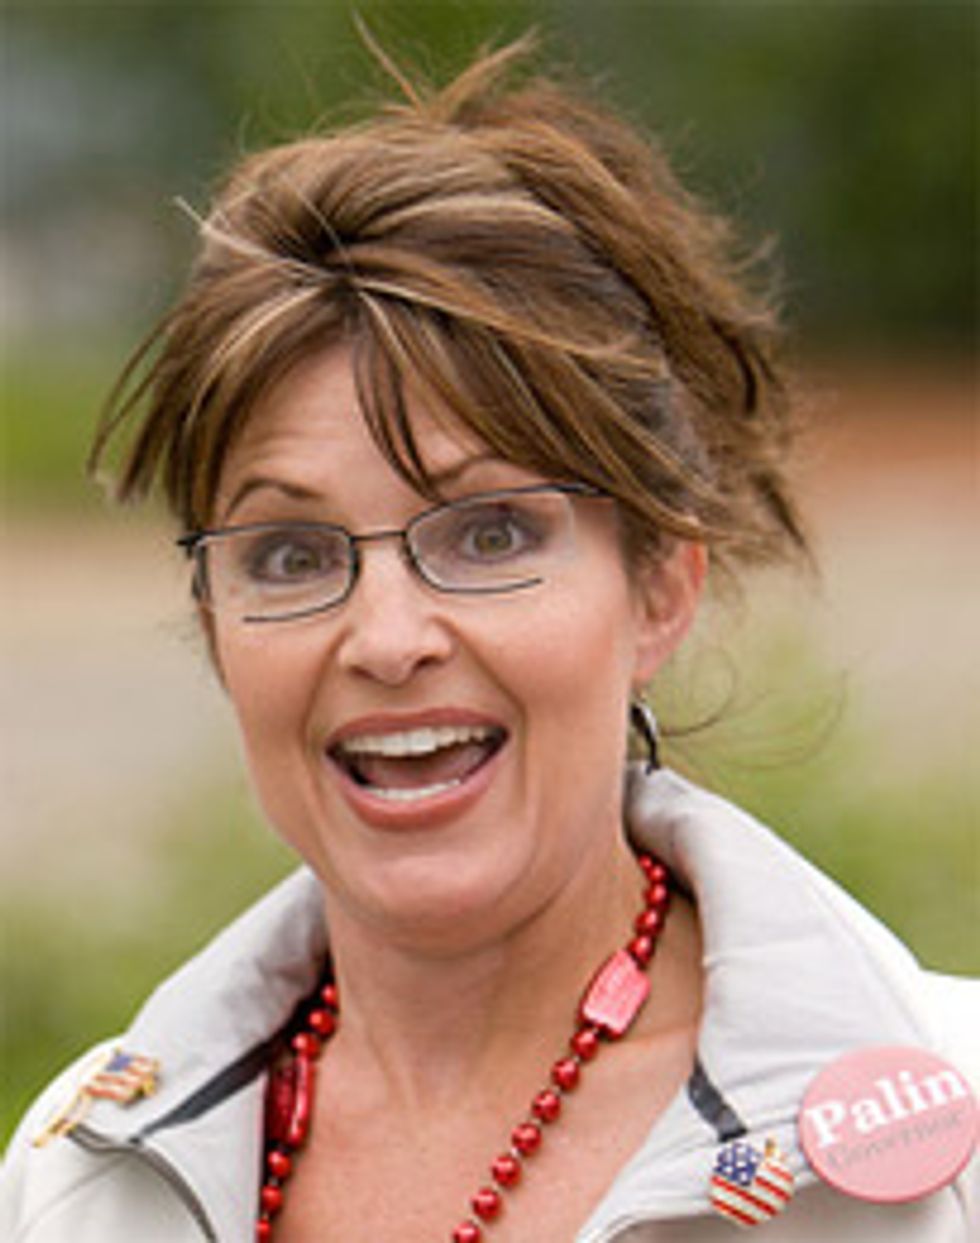 Sarah Palin Resurrects Bus Tour For Fried Butter, Other Surprises